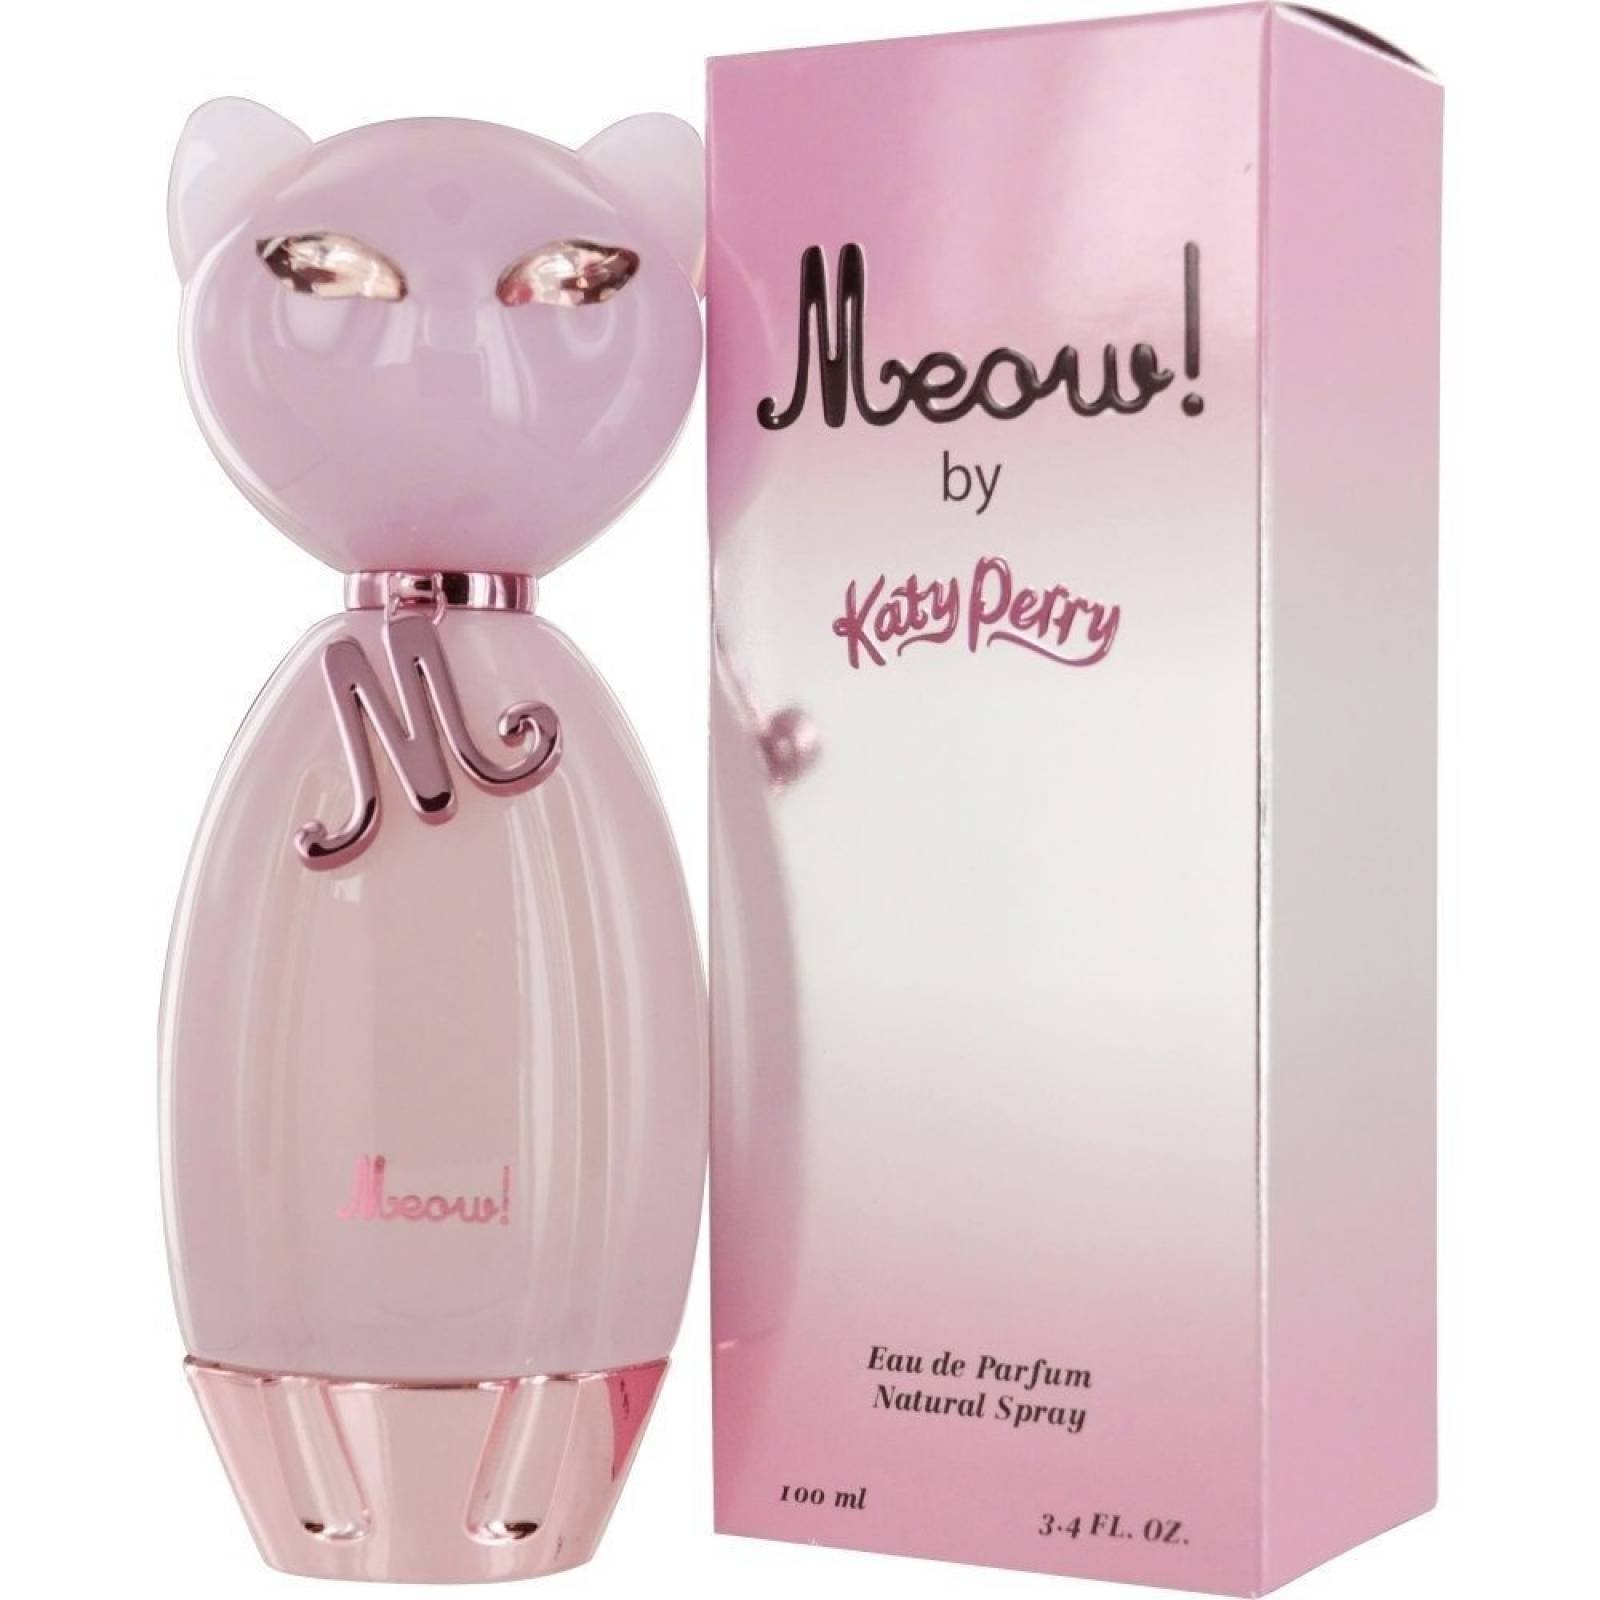 Meow De Katy Perry Eau de Parfum 100 ml